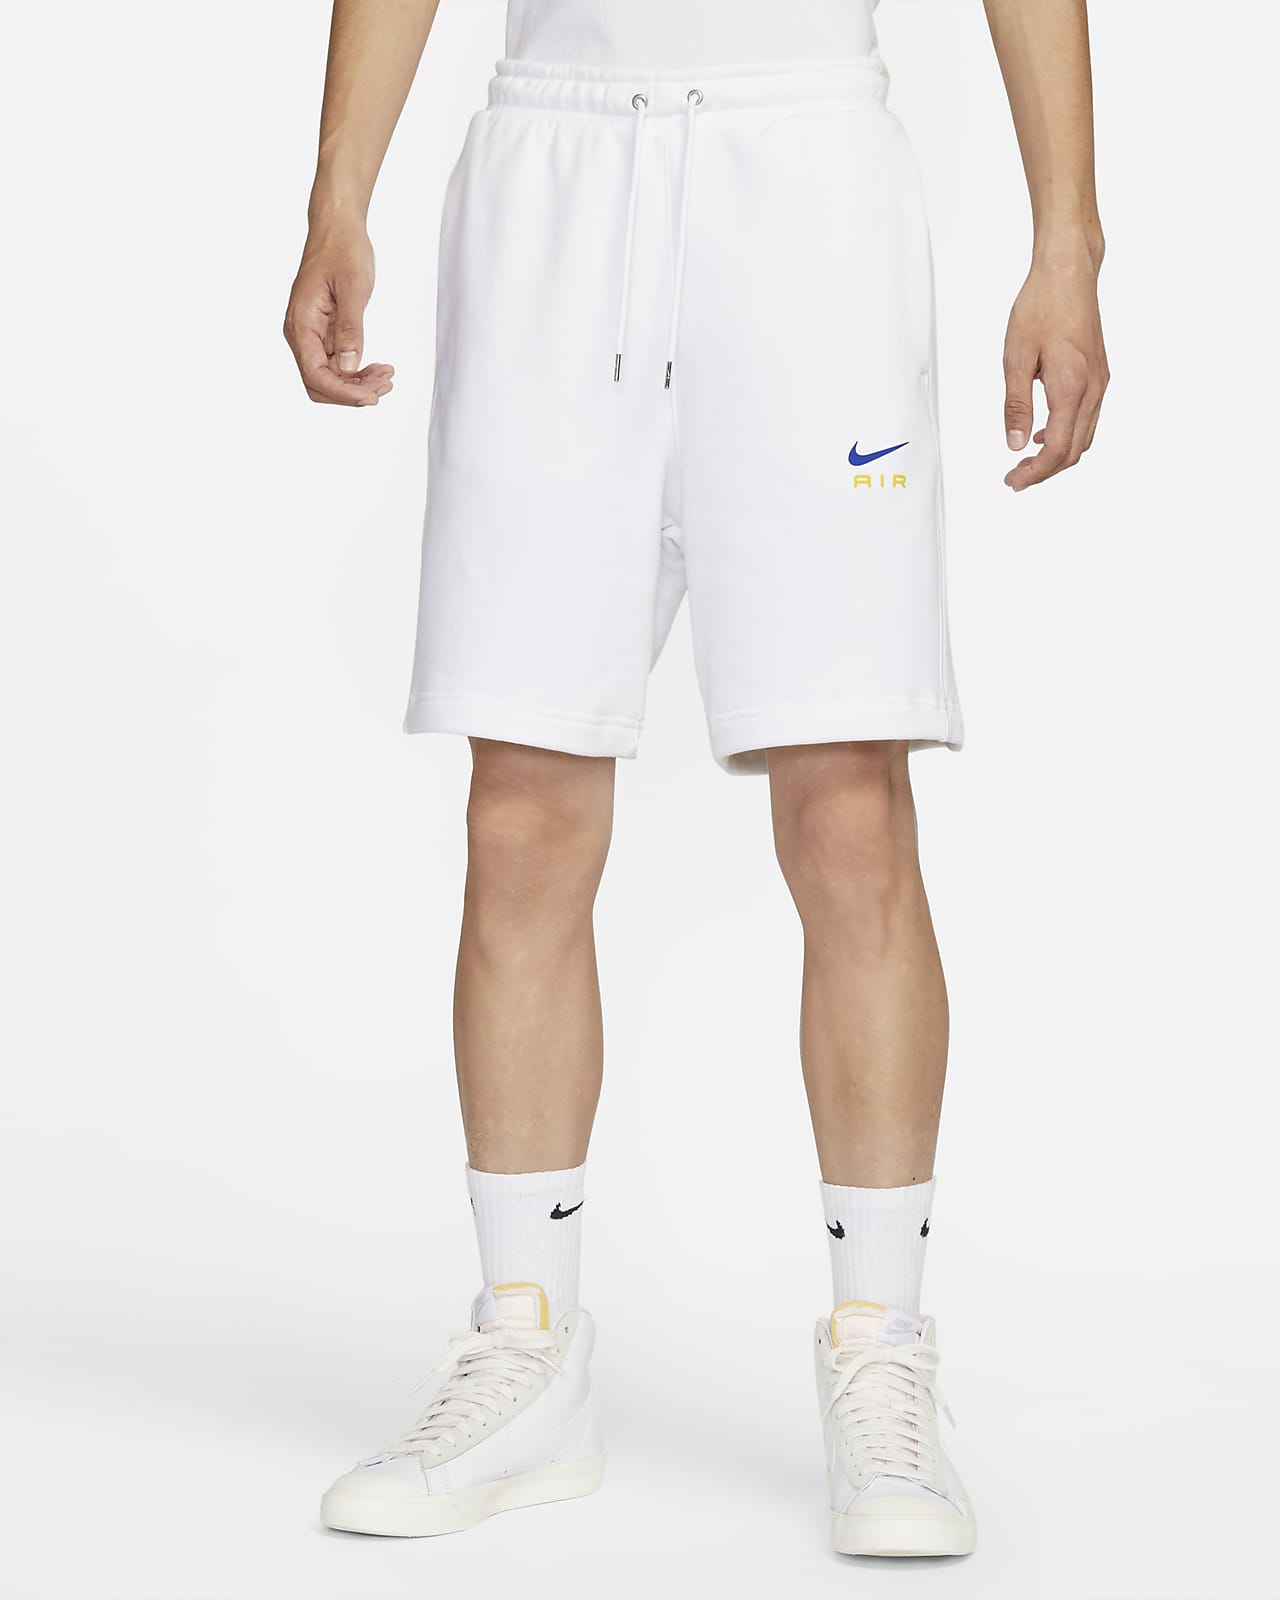 Nike Sportswear Air Men's French Terry Shorts. Nike SG